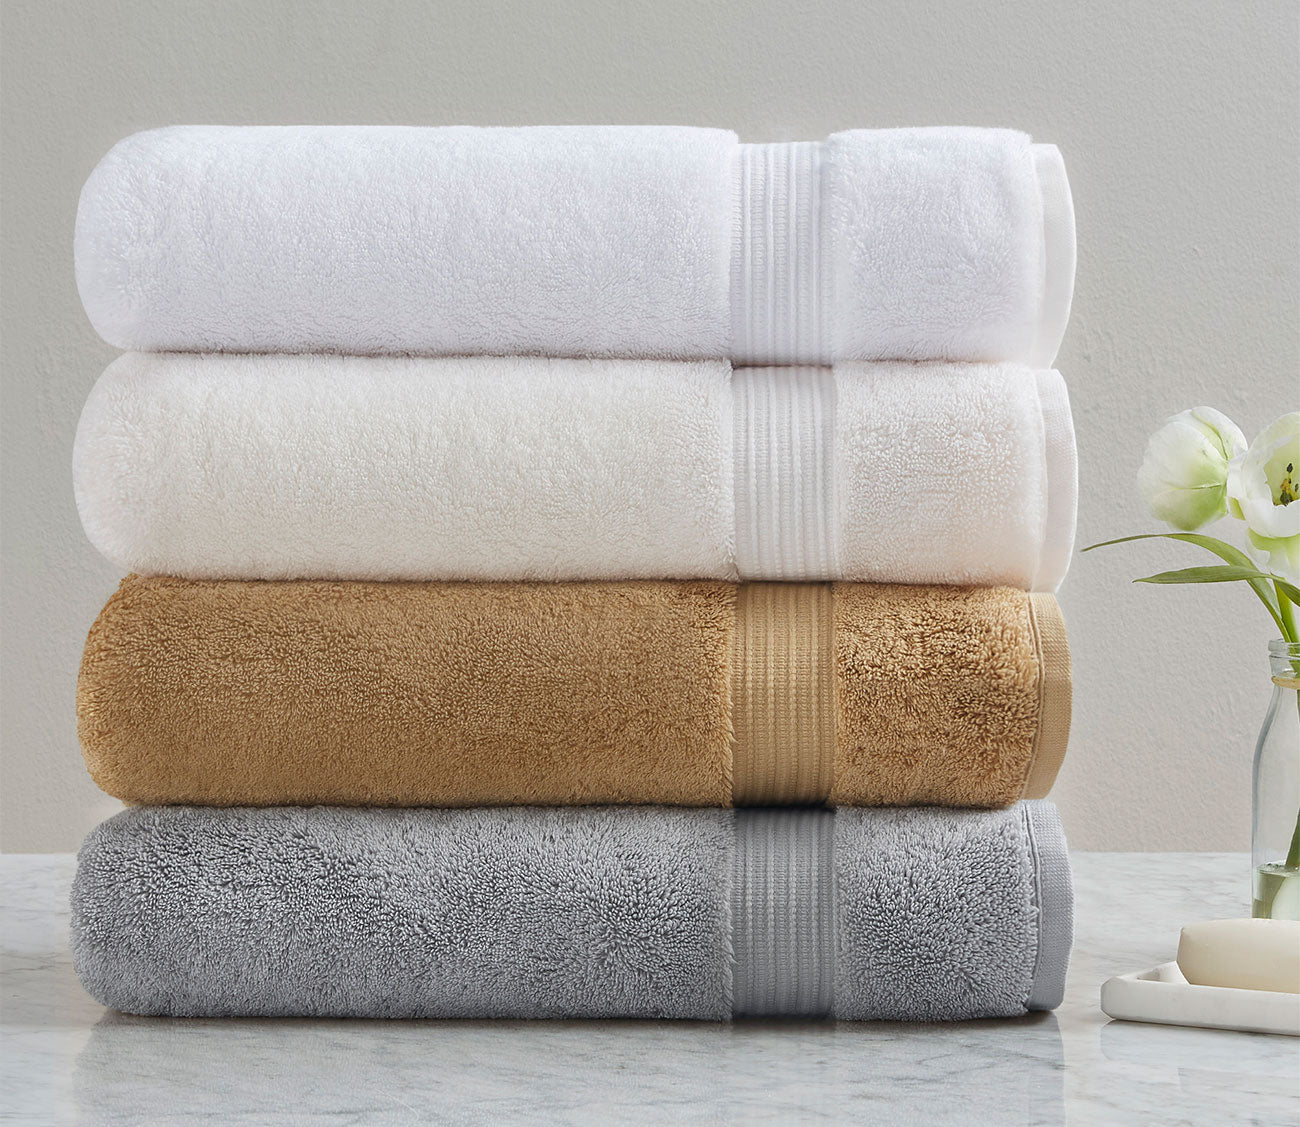 Organic 800-Gram White Turkish Bath Towels